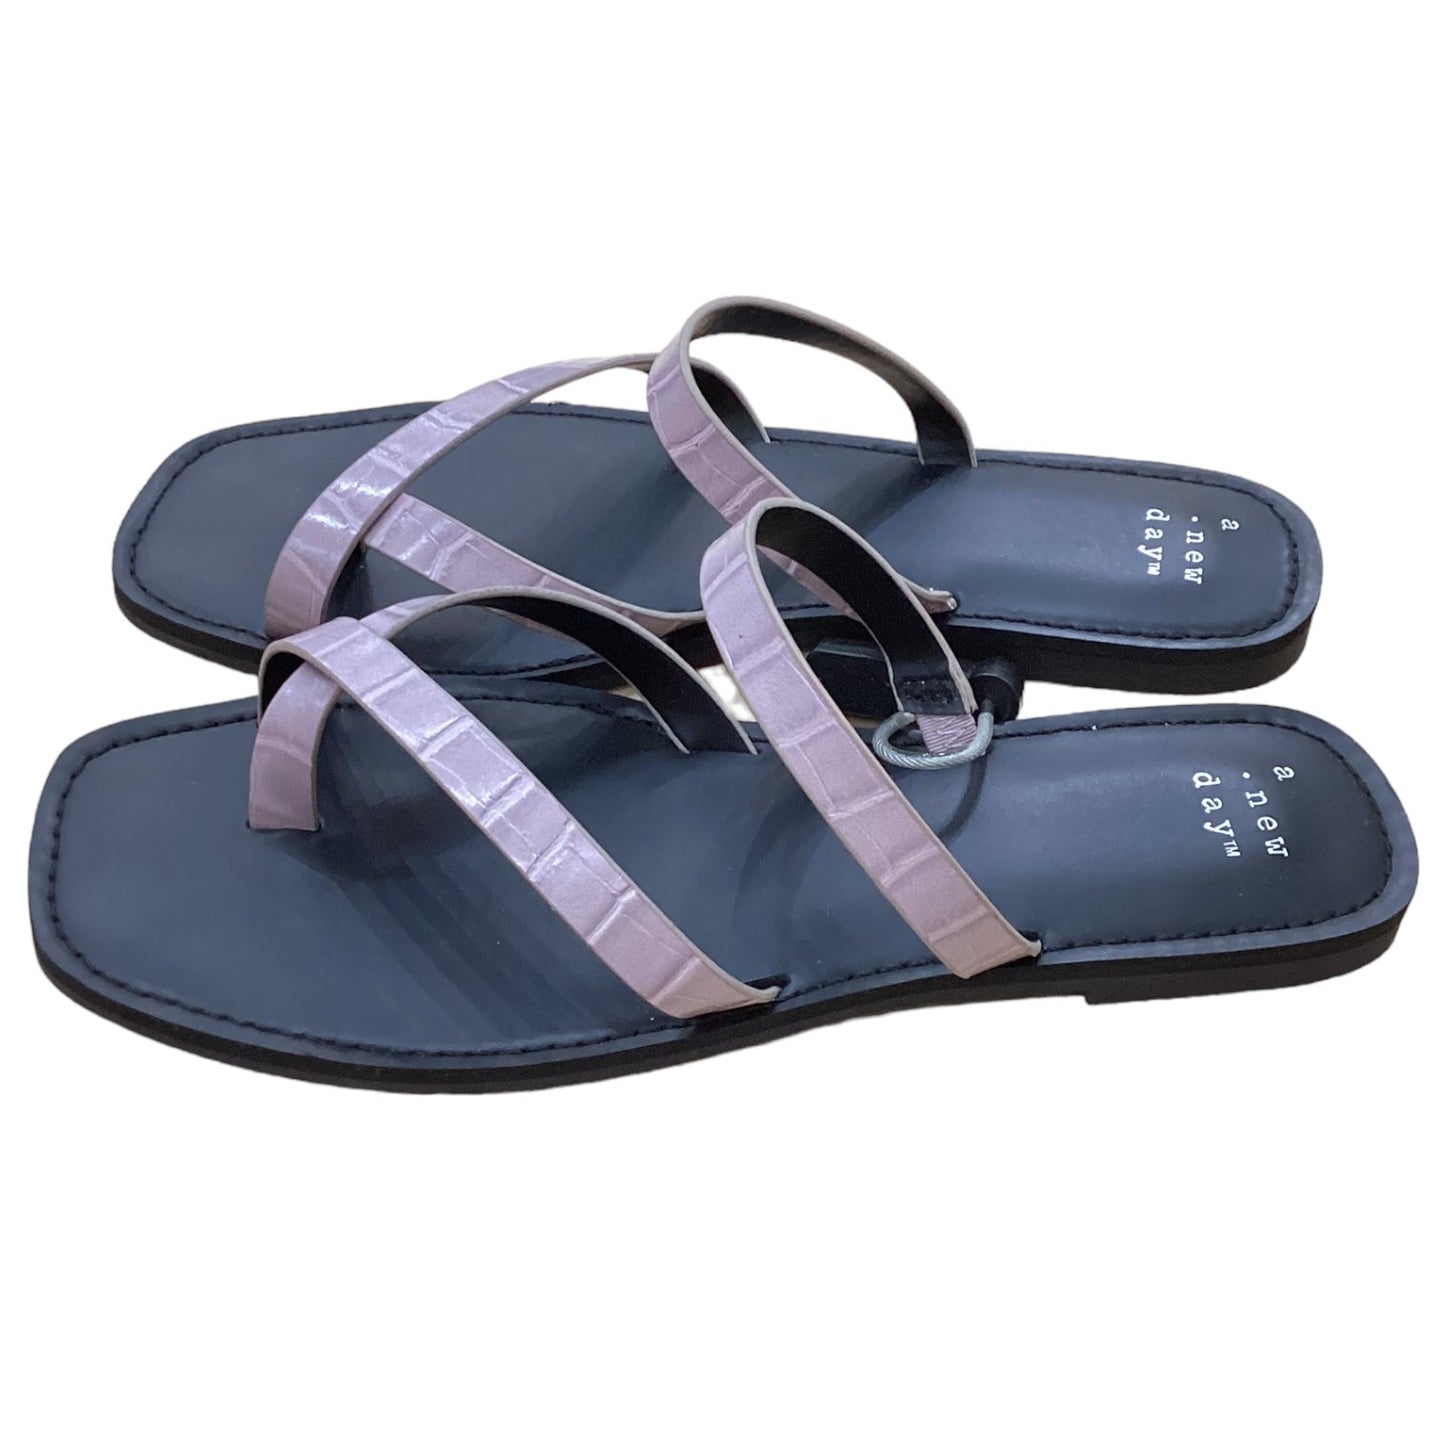 Purple Sandals Flip Flops A New Day, Size 8